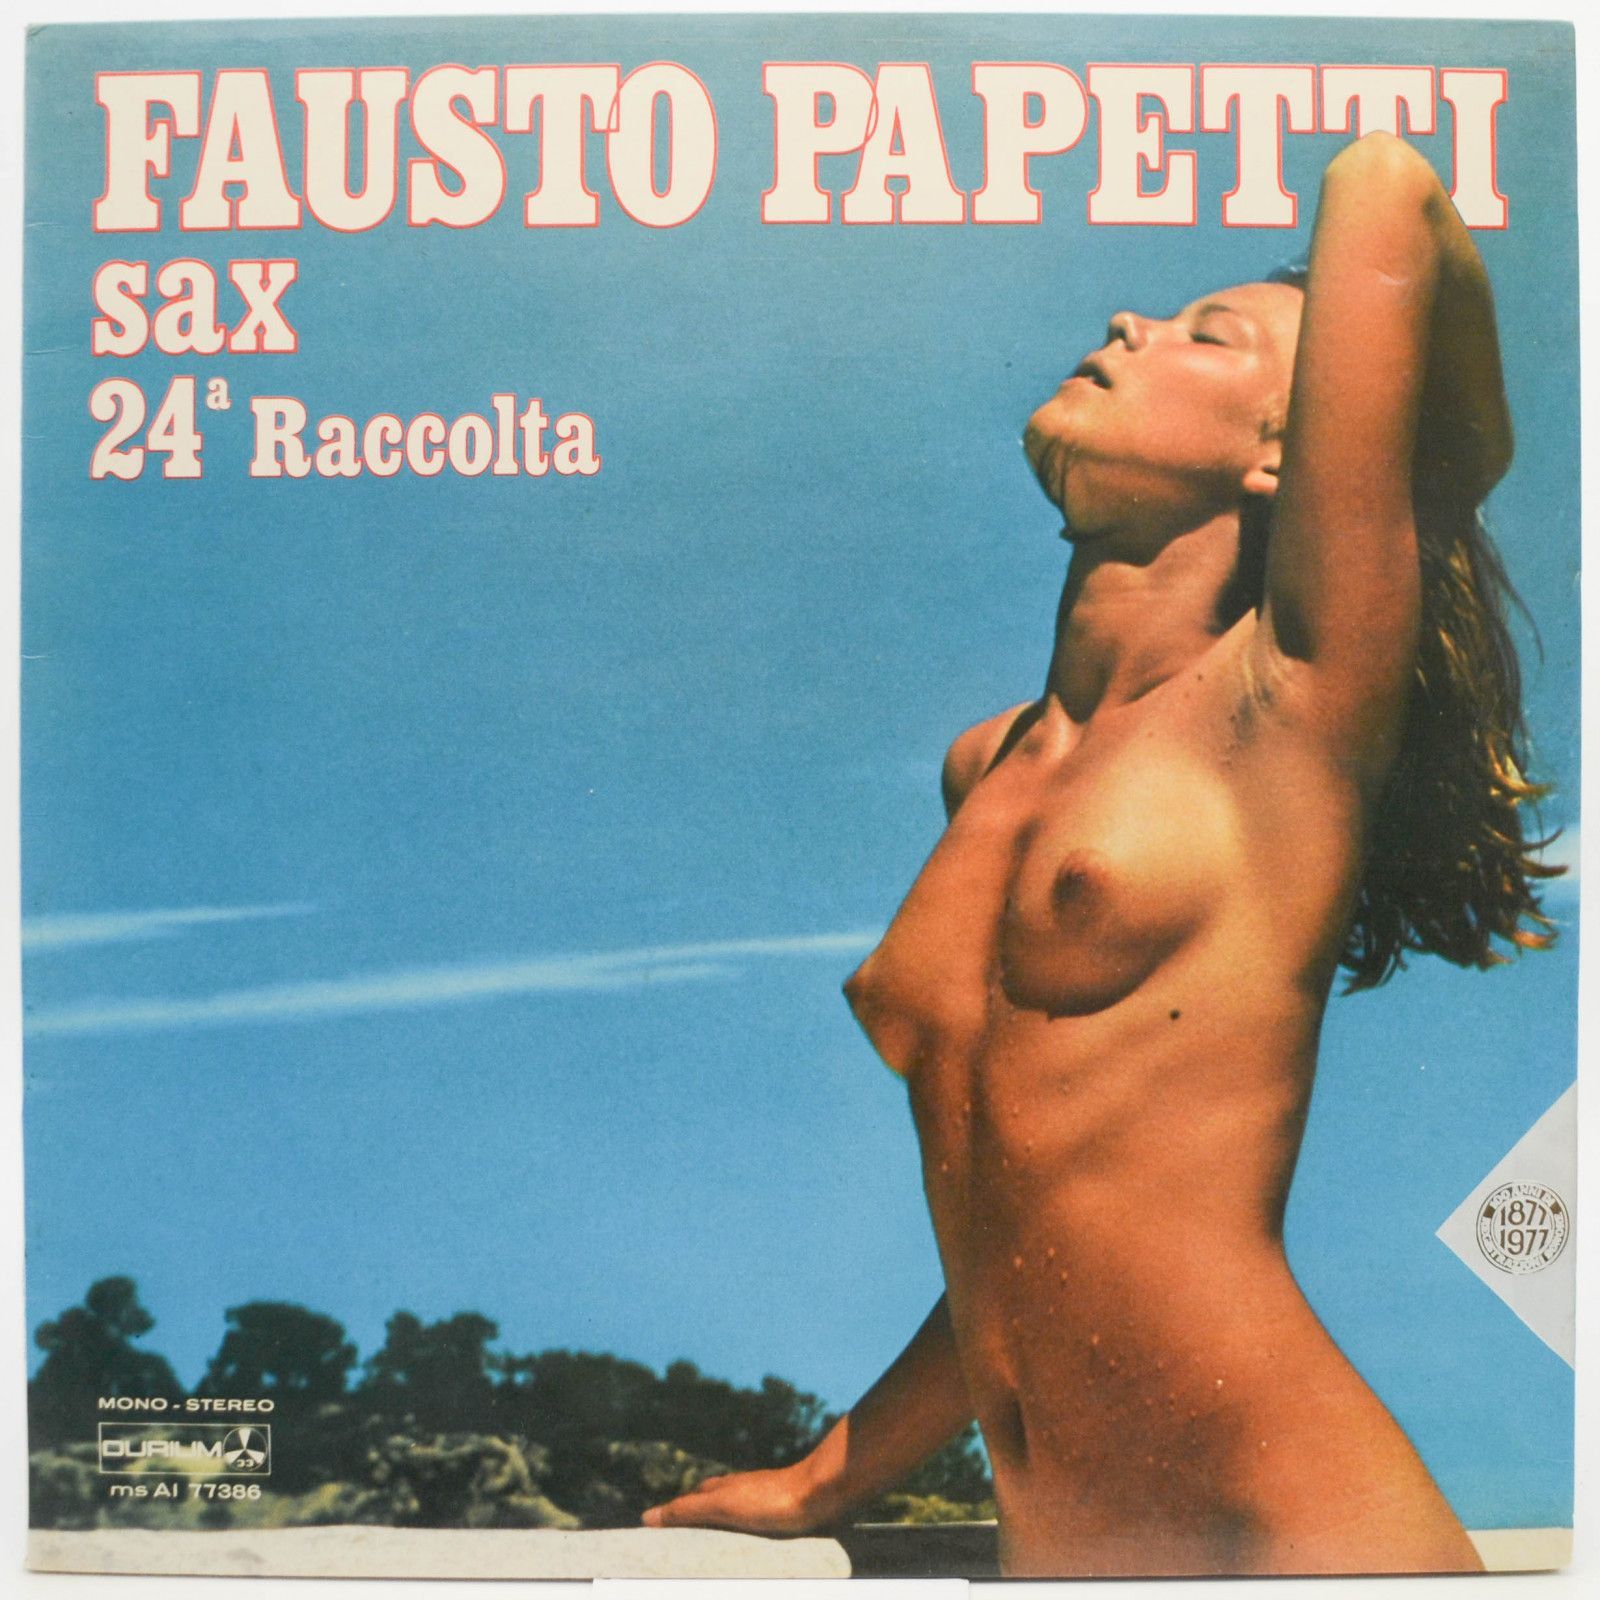 Fausto Papetti — 24a Raccolta (1-st, Italy), 1977